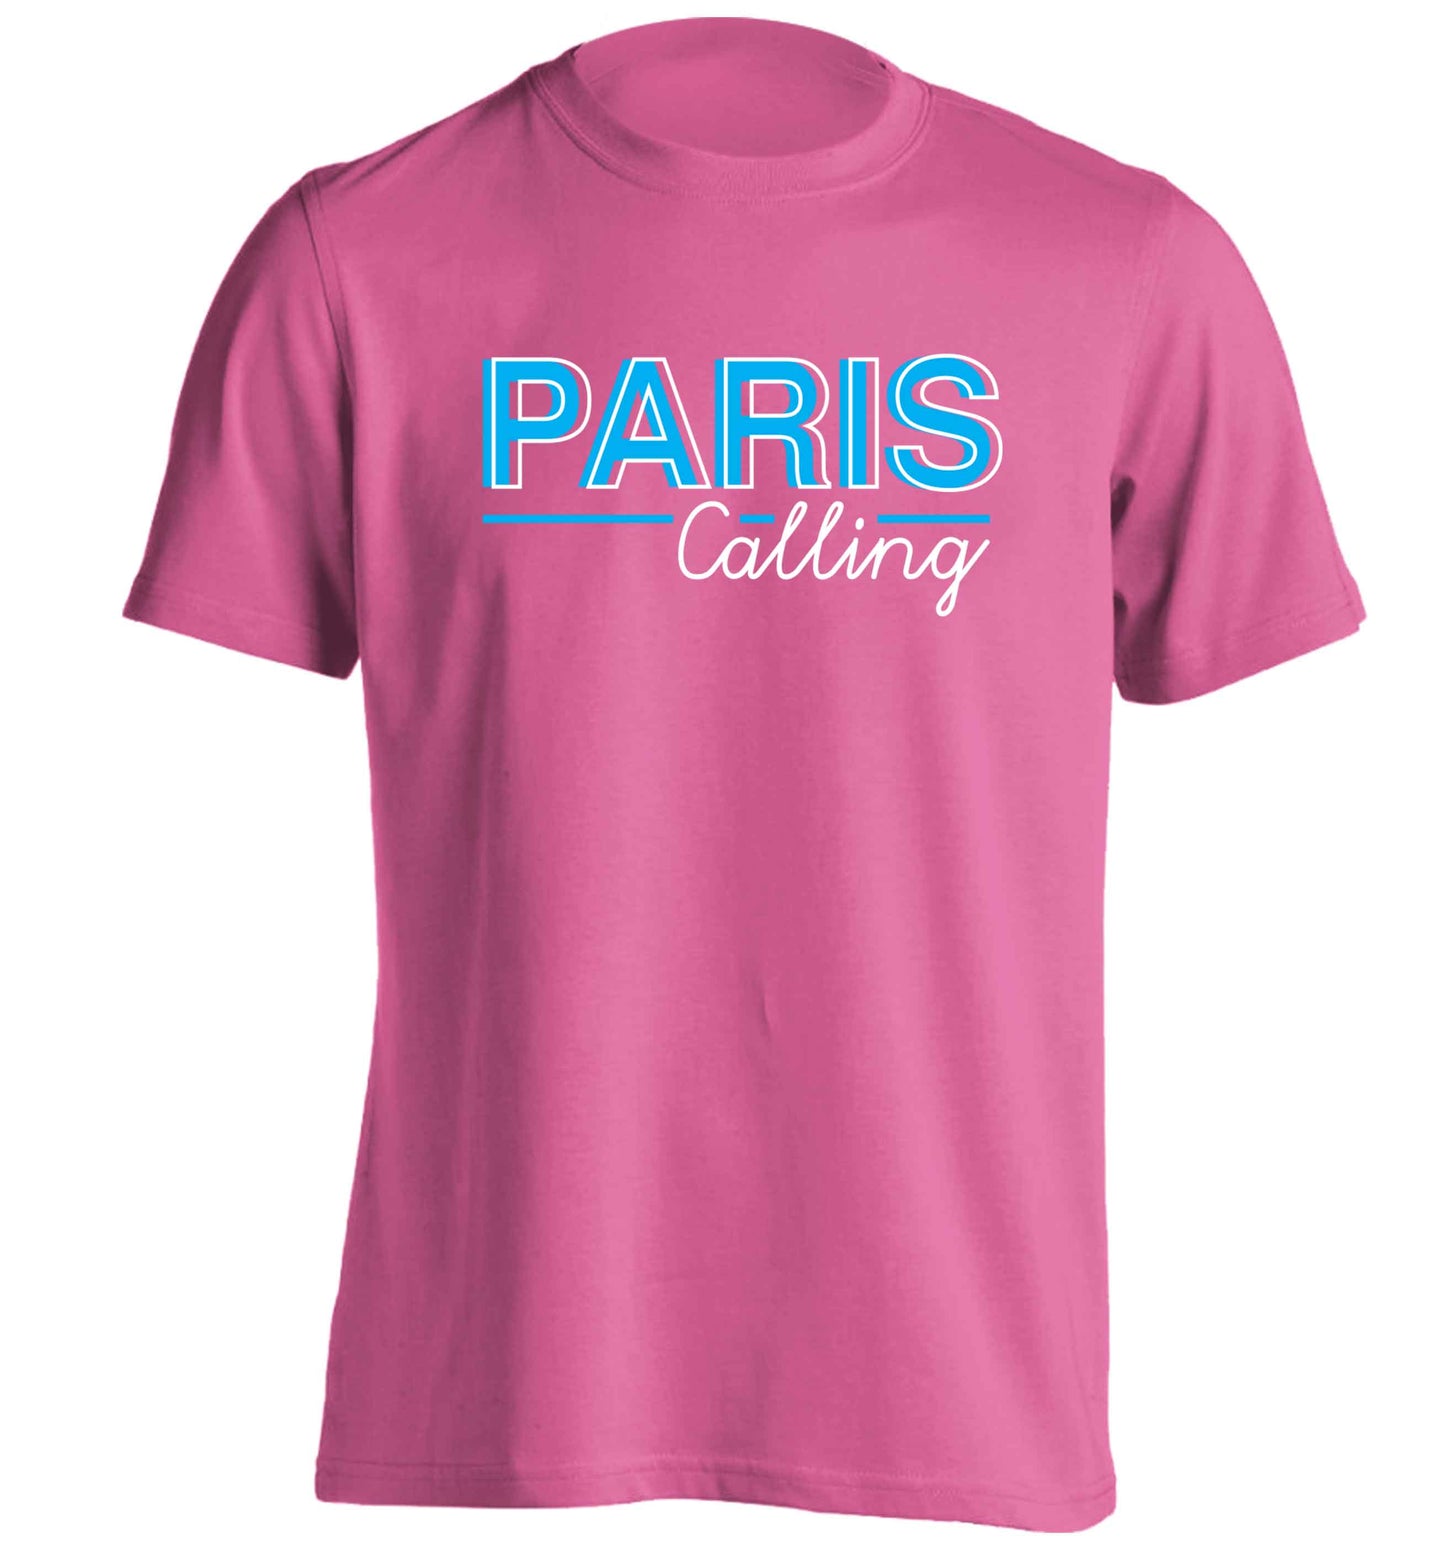 Paris calling adults unisex pink Tshirt 2XL